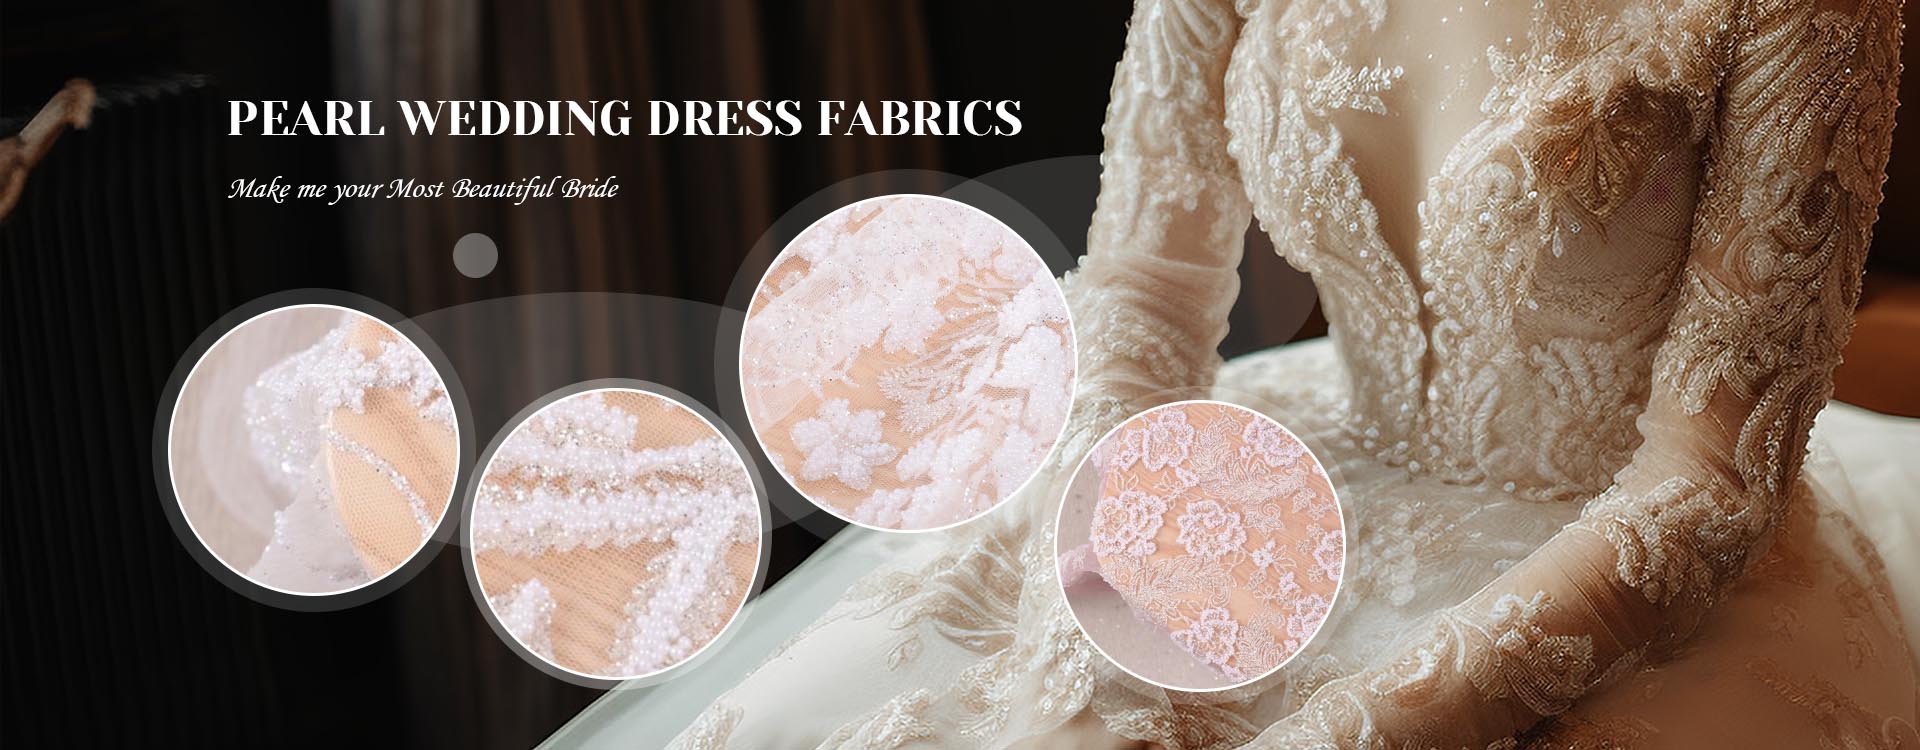 Chine Perle Robe de Mariée Fabricants de Tissus